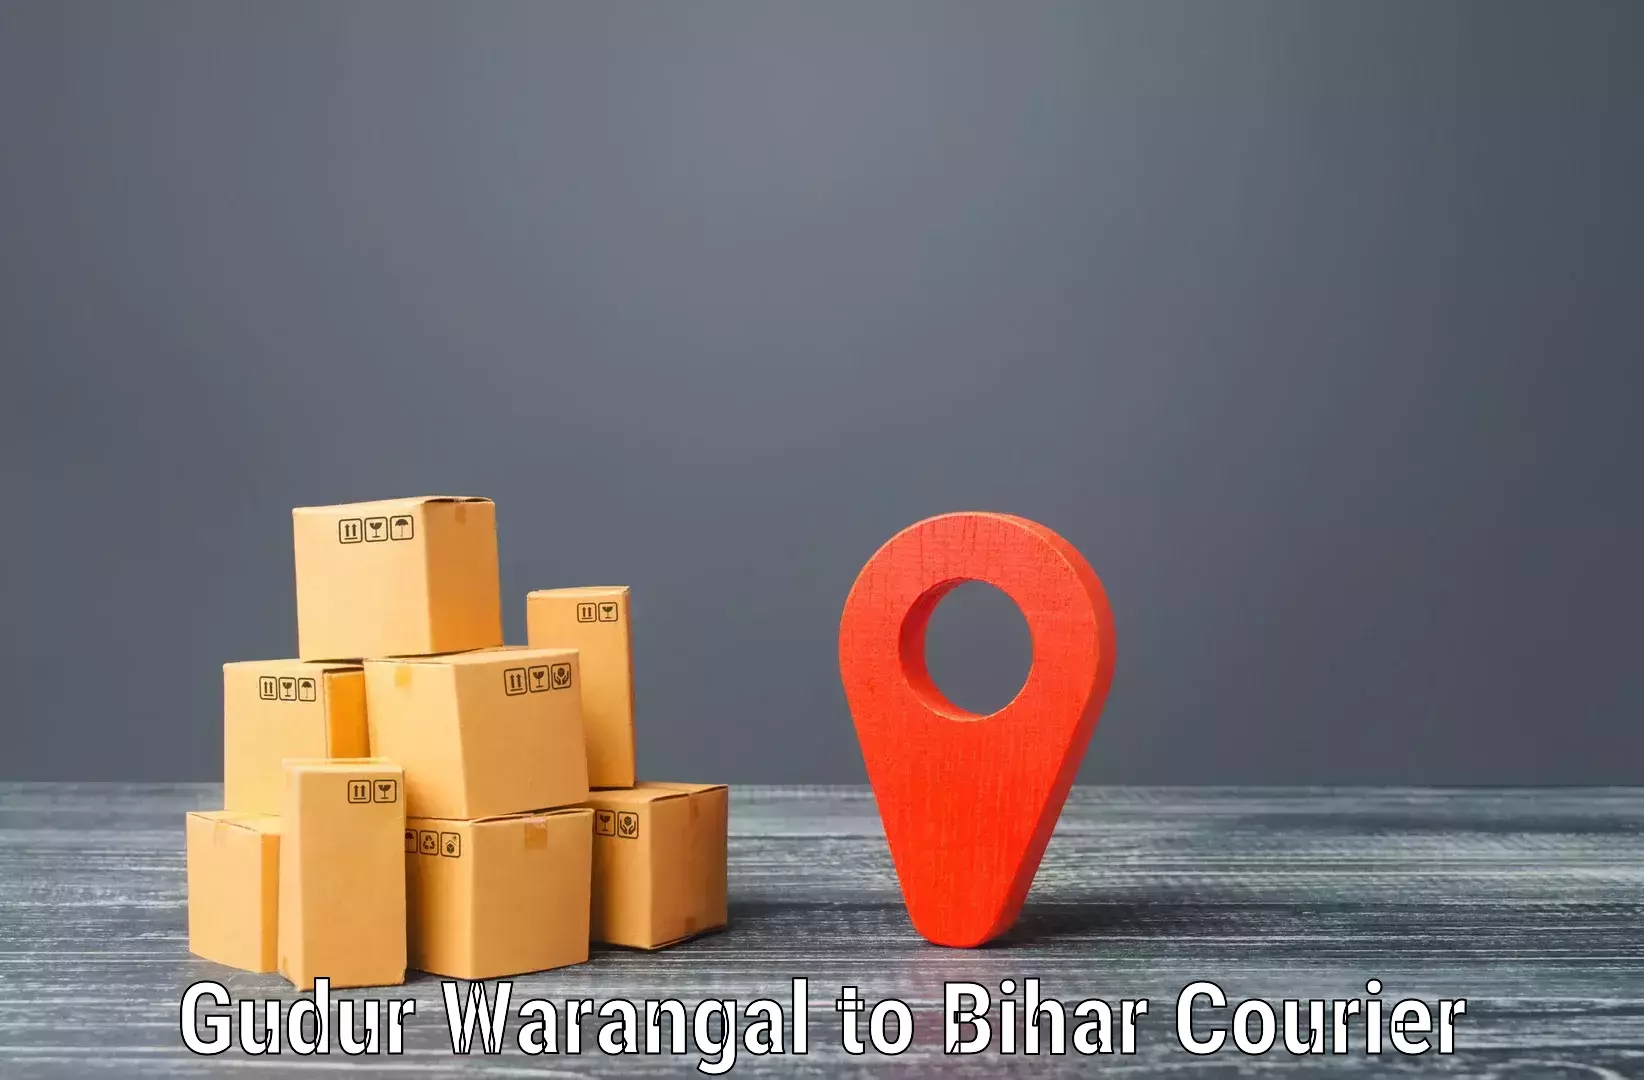 Bulk shipping discounts Gudur Warangal to Alamnagar